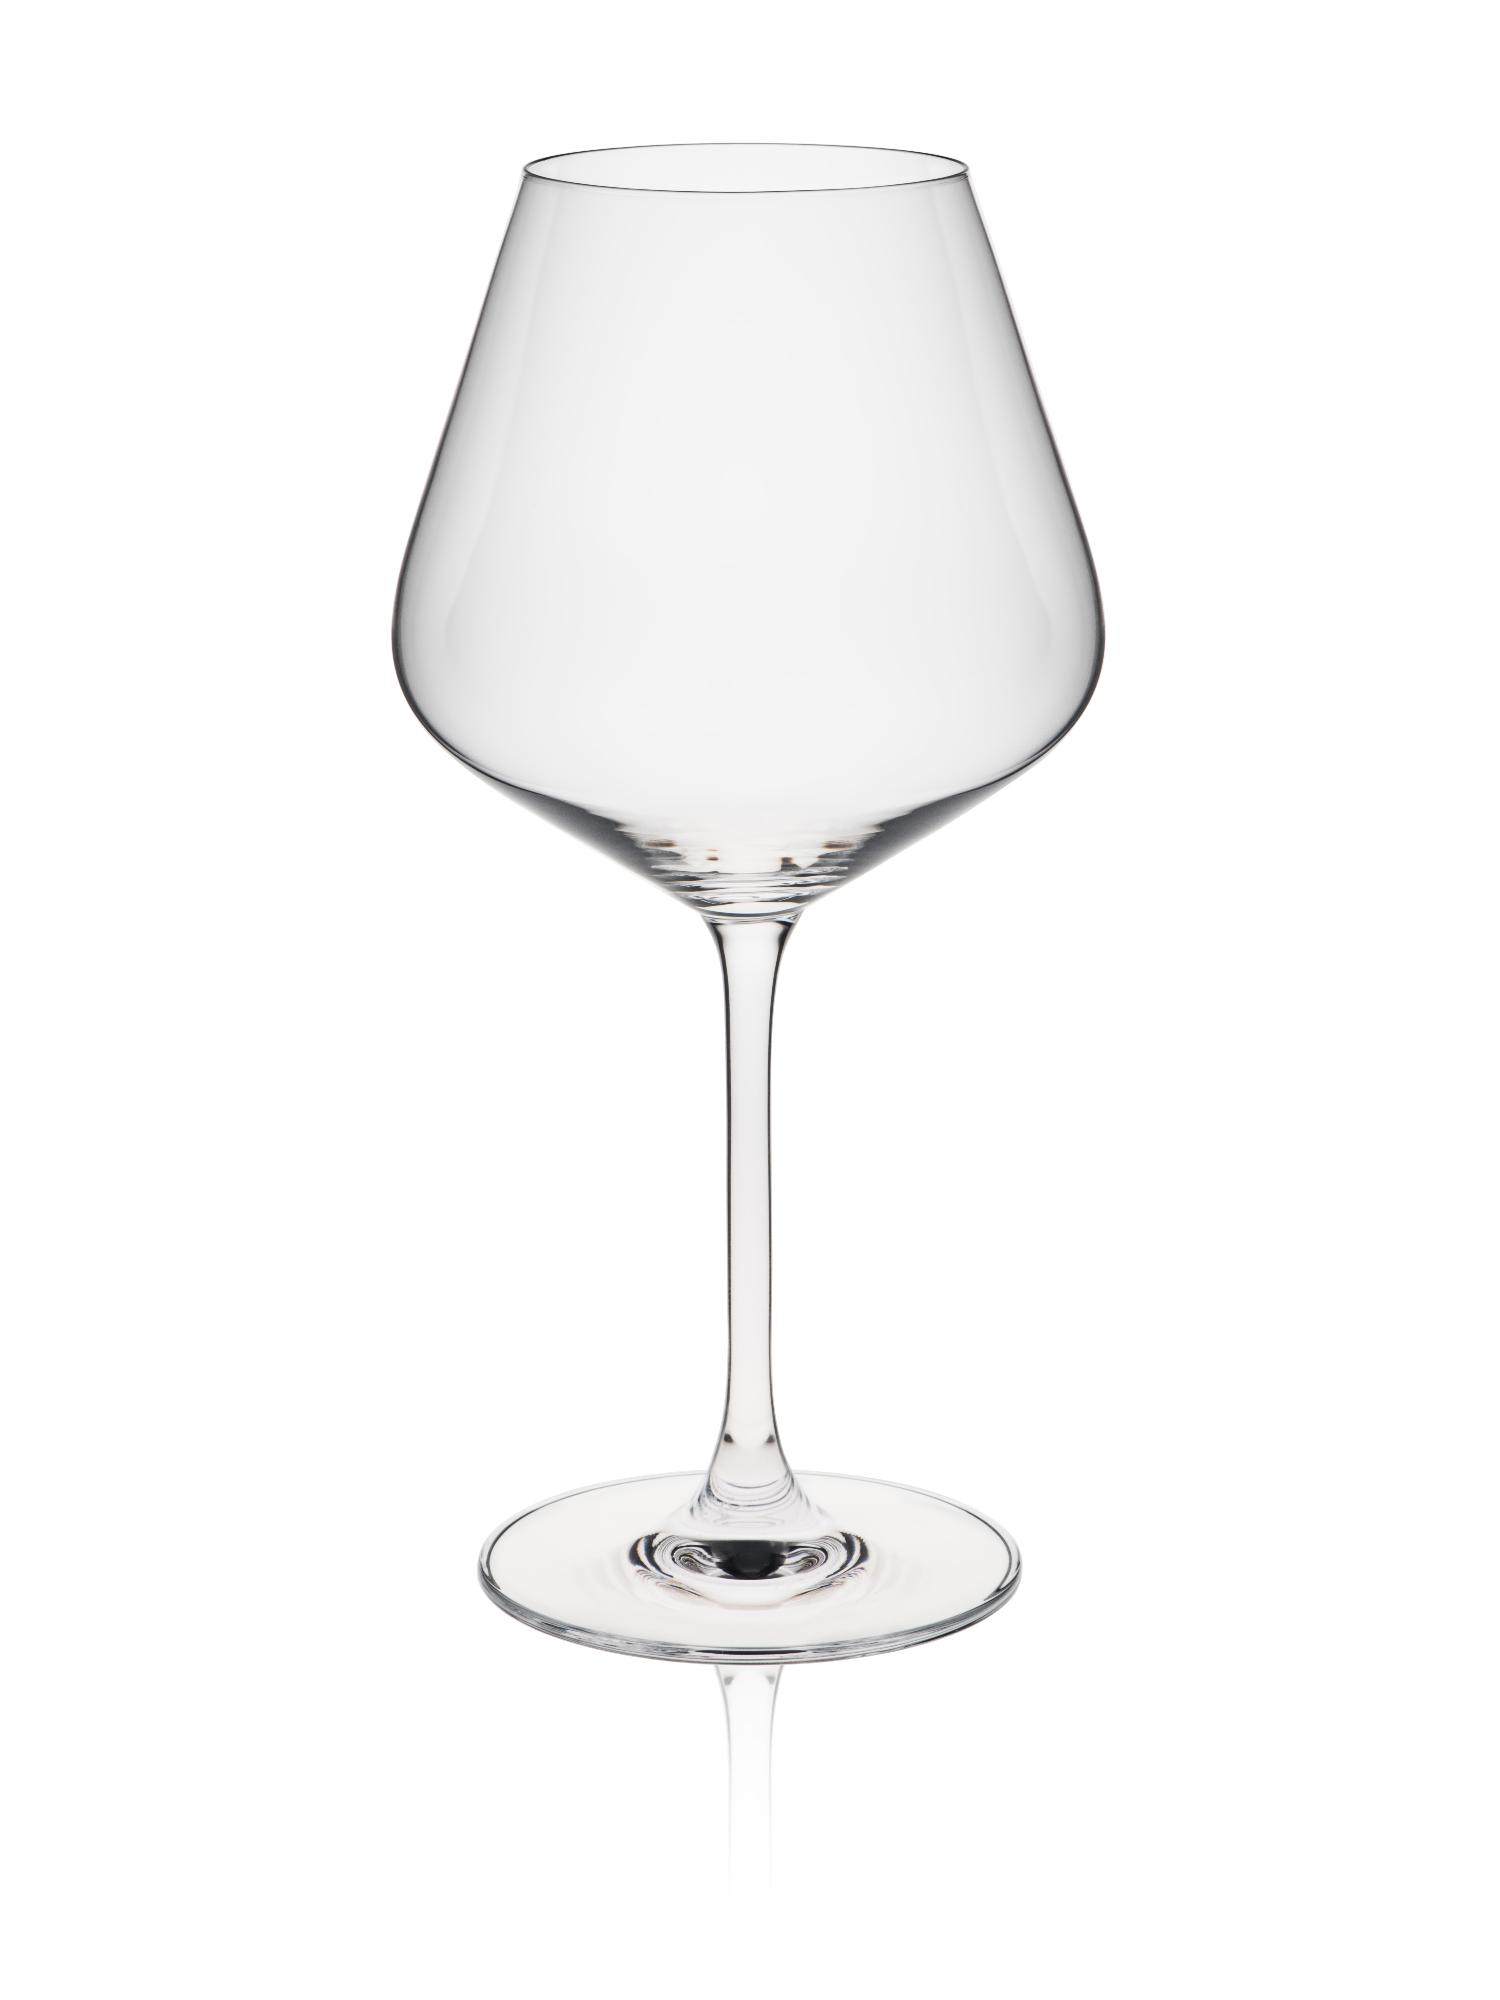 Le Vin Burgundy glass, 690ml